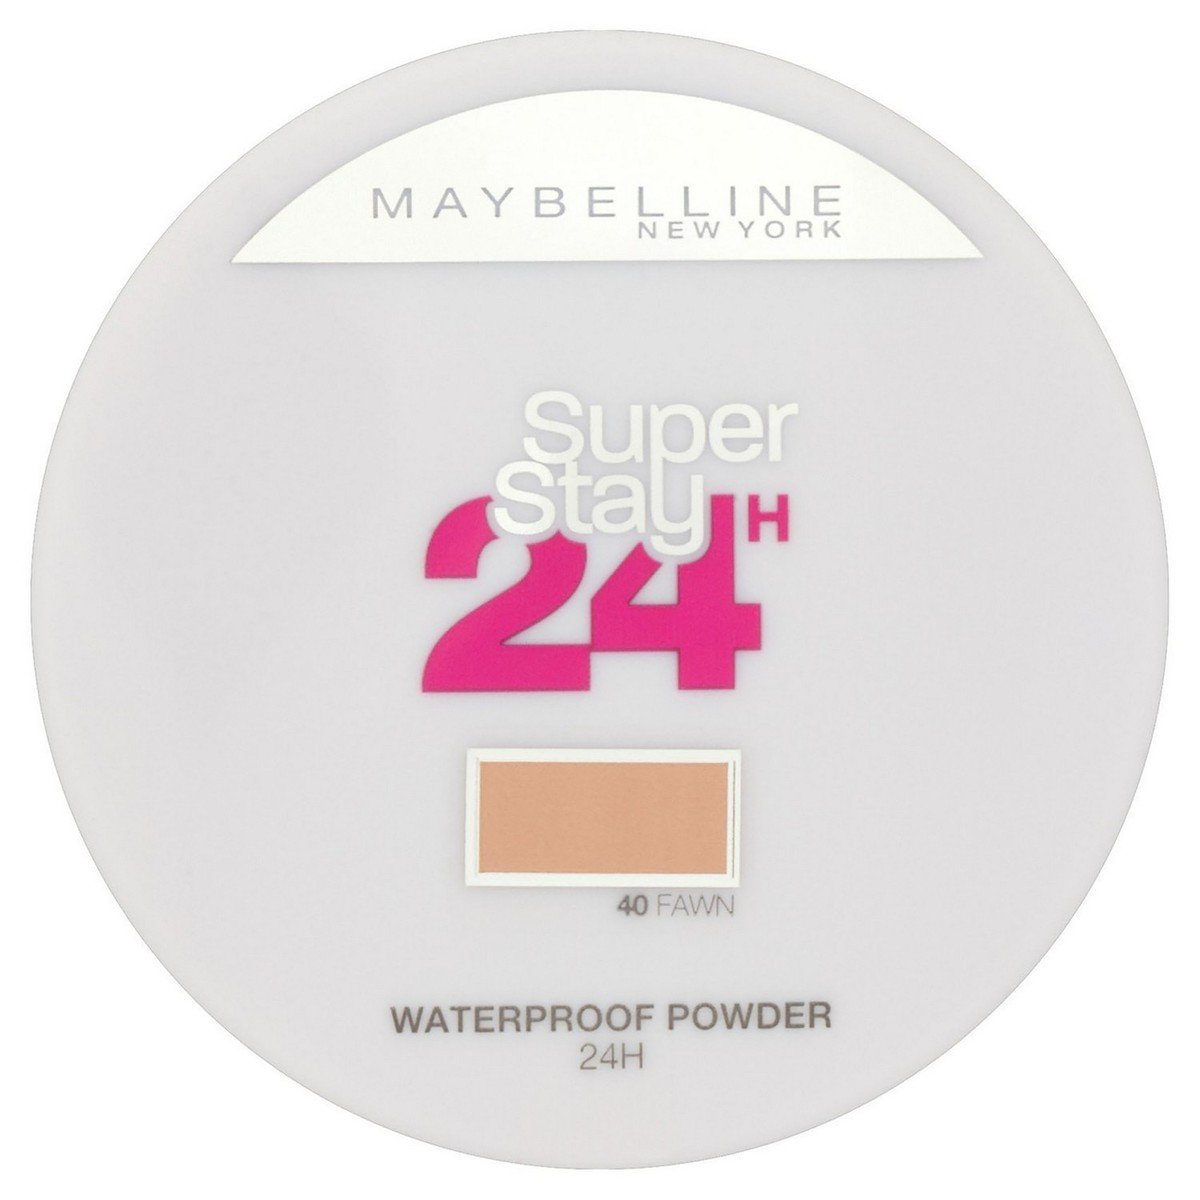 Maybelline Superstay 24Hr Powder 40 Fawn 1pc